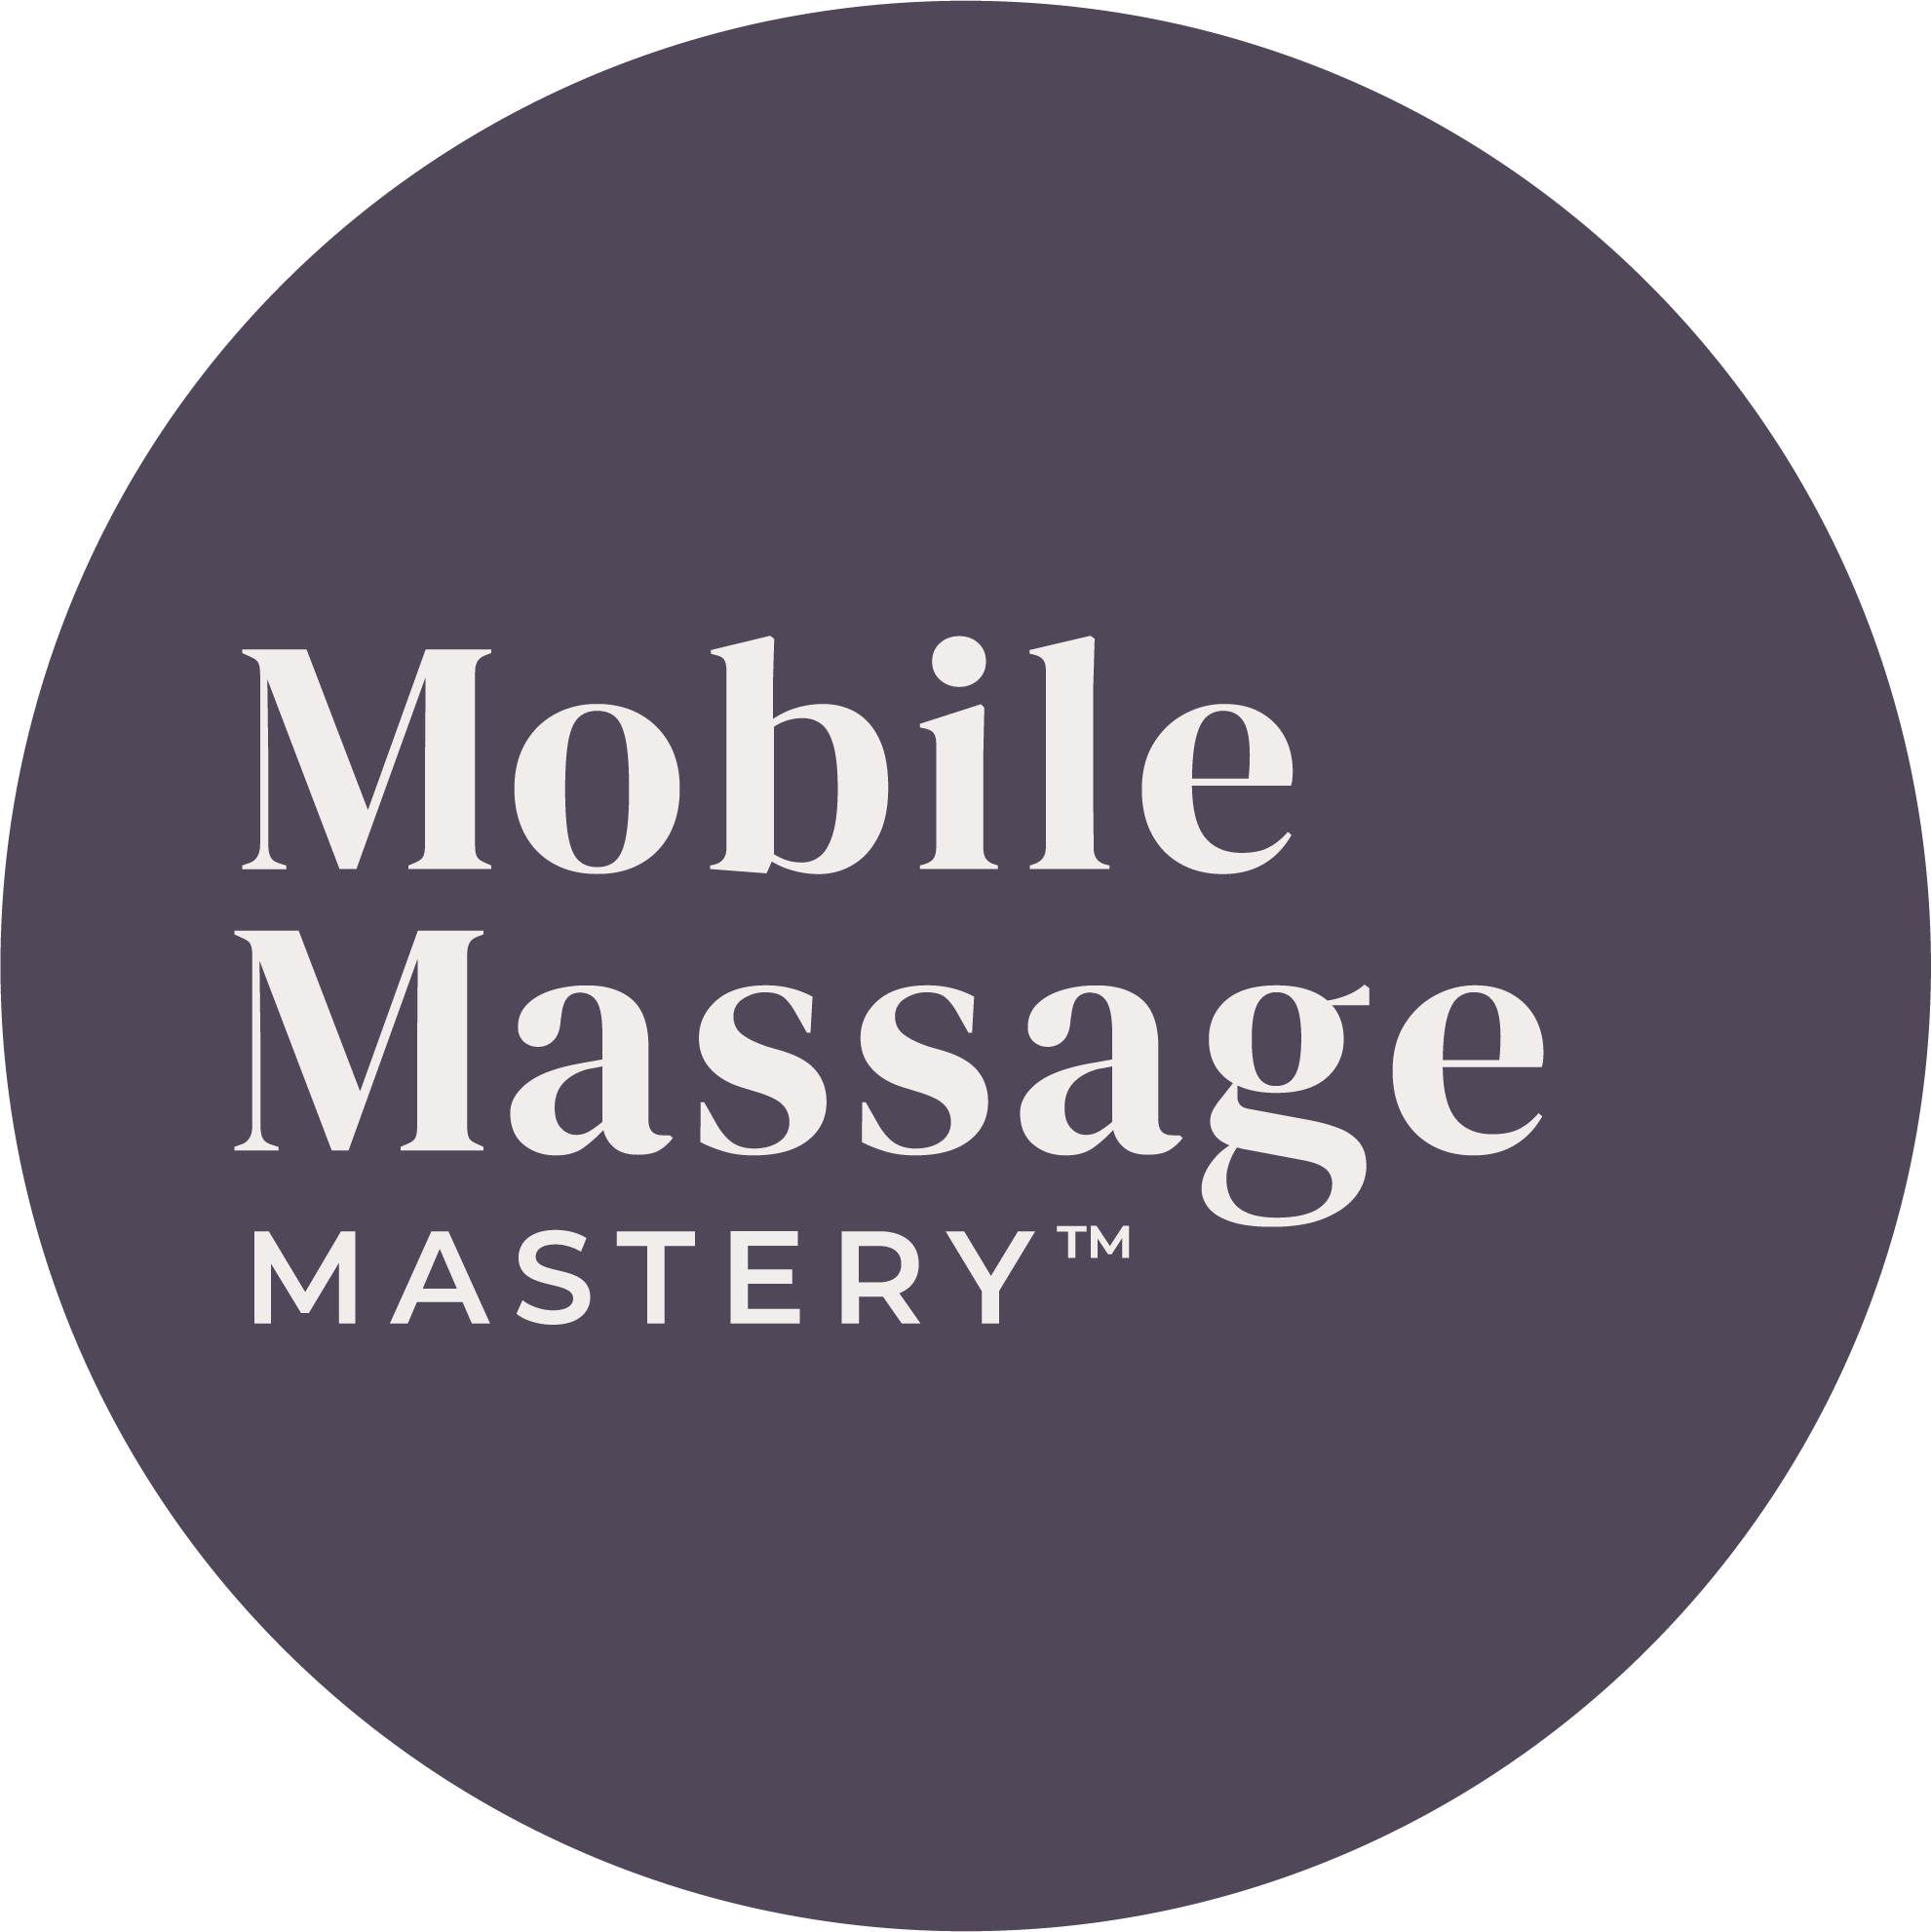 Mobile Massage Mastery